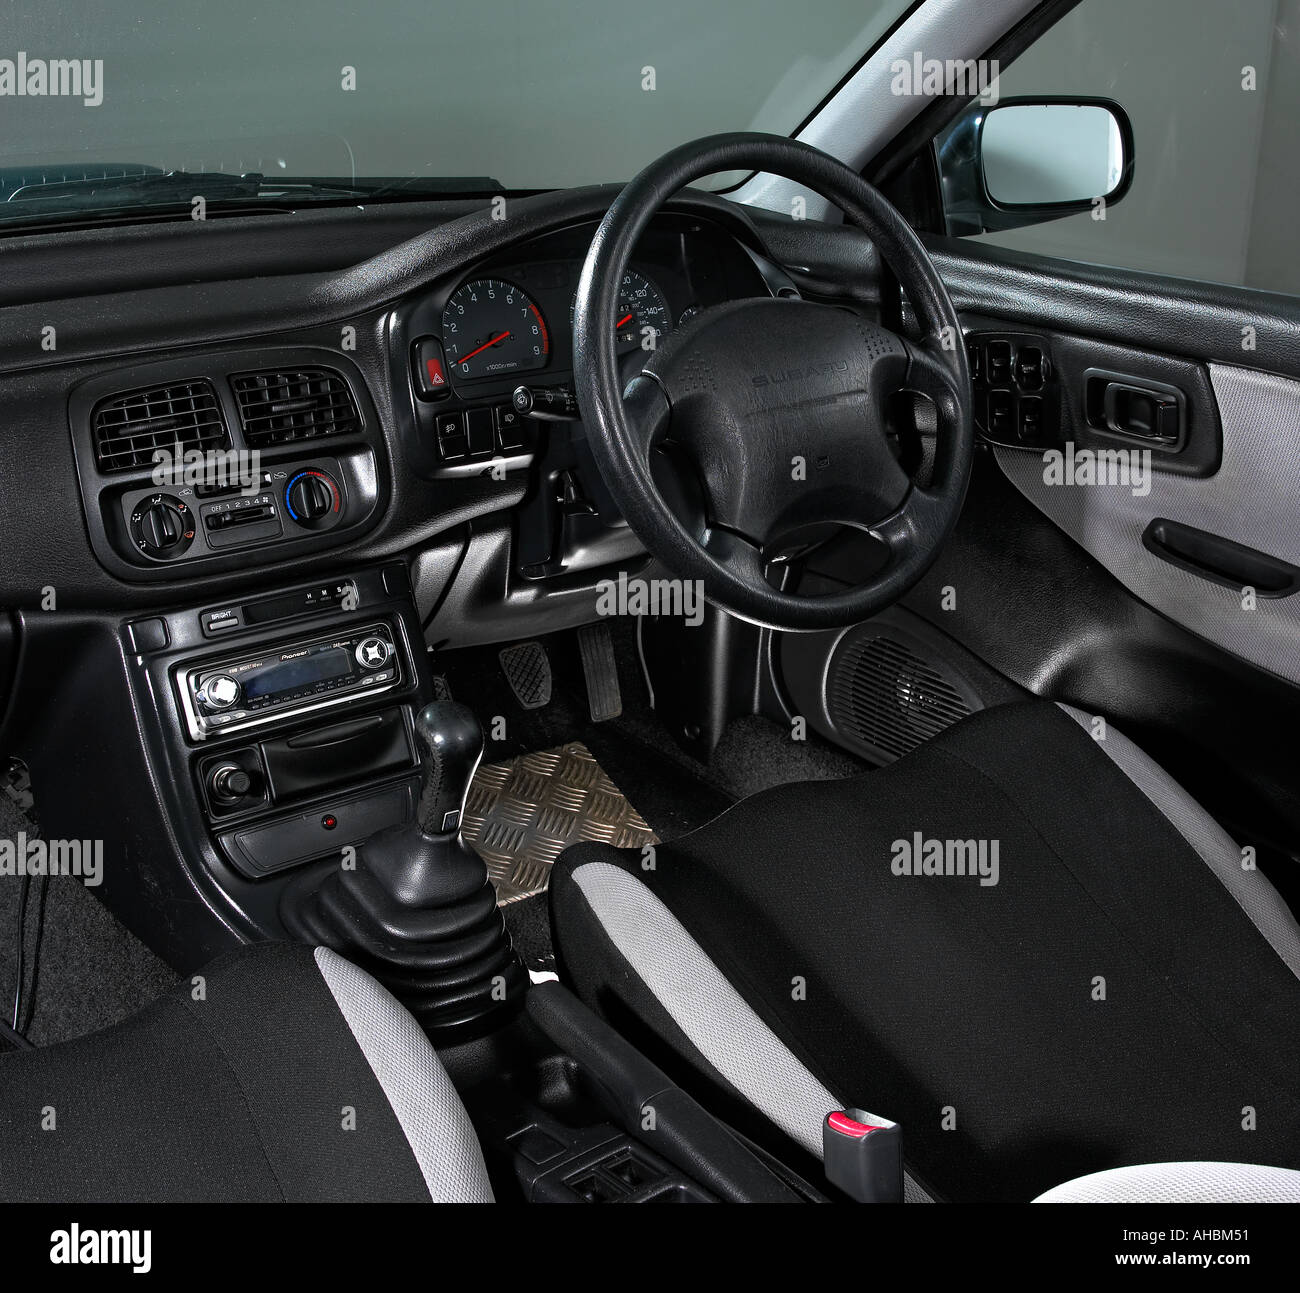 Subaru impreza car interior hi-res stock photography and images - Alamy